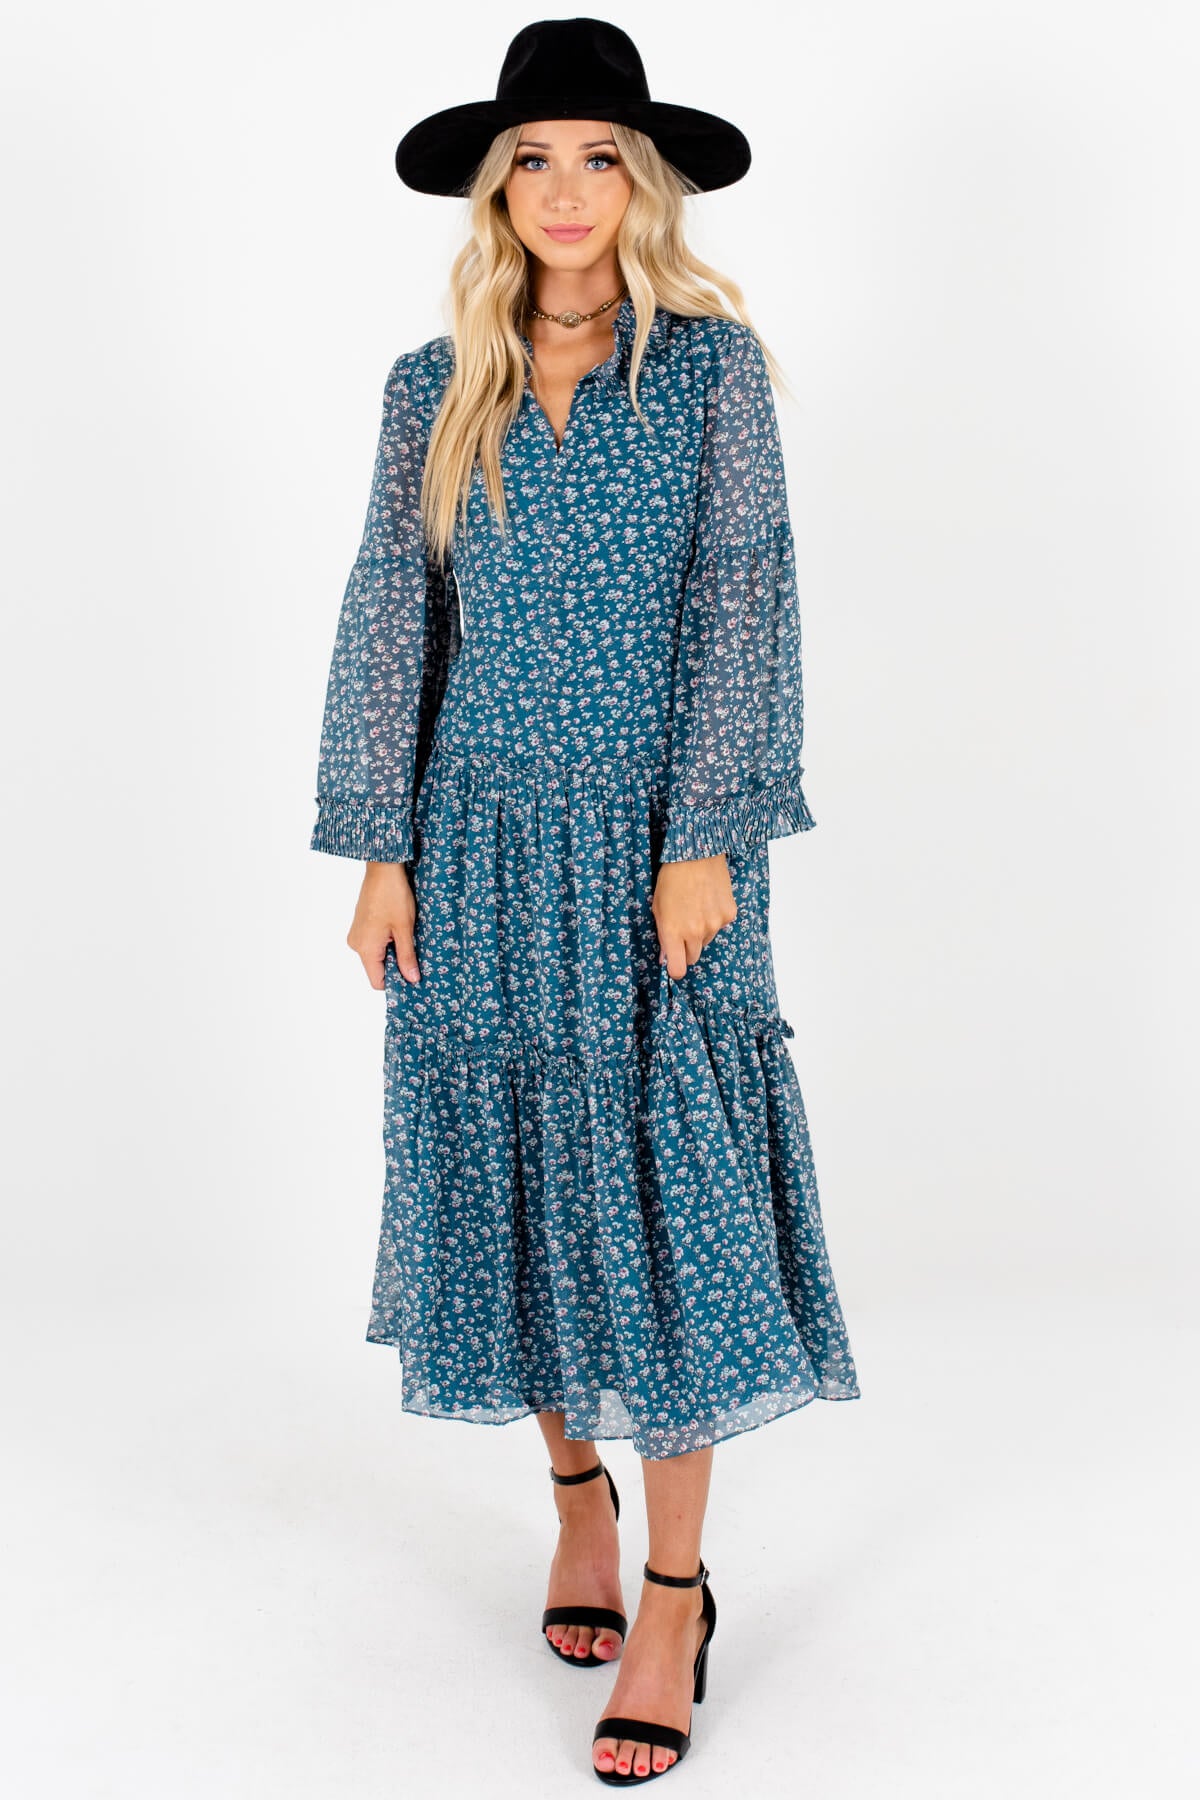 Teal Floral Print Peasant Midi Dresses Affordable Online Boutique